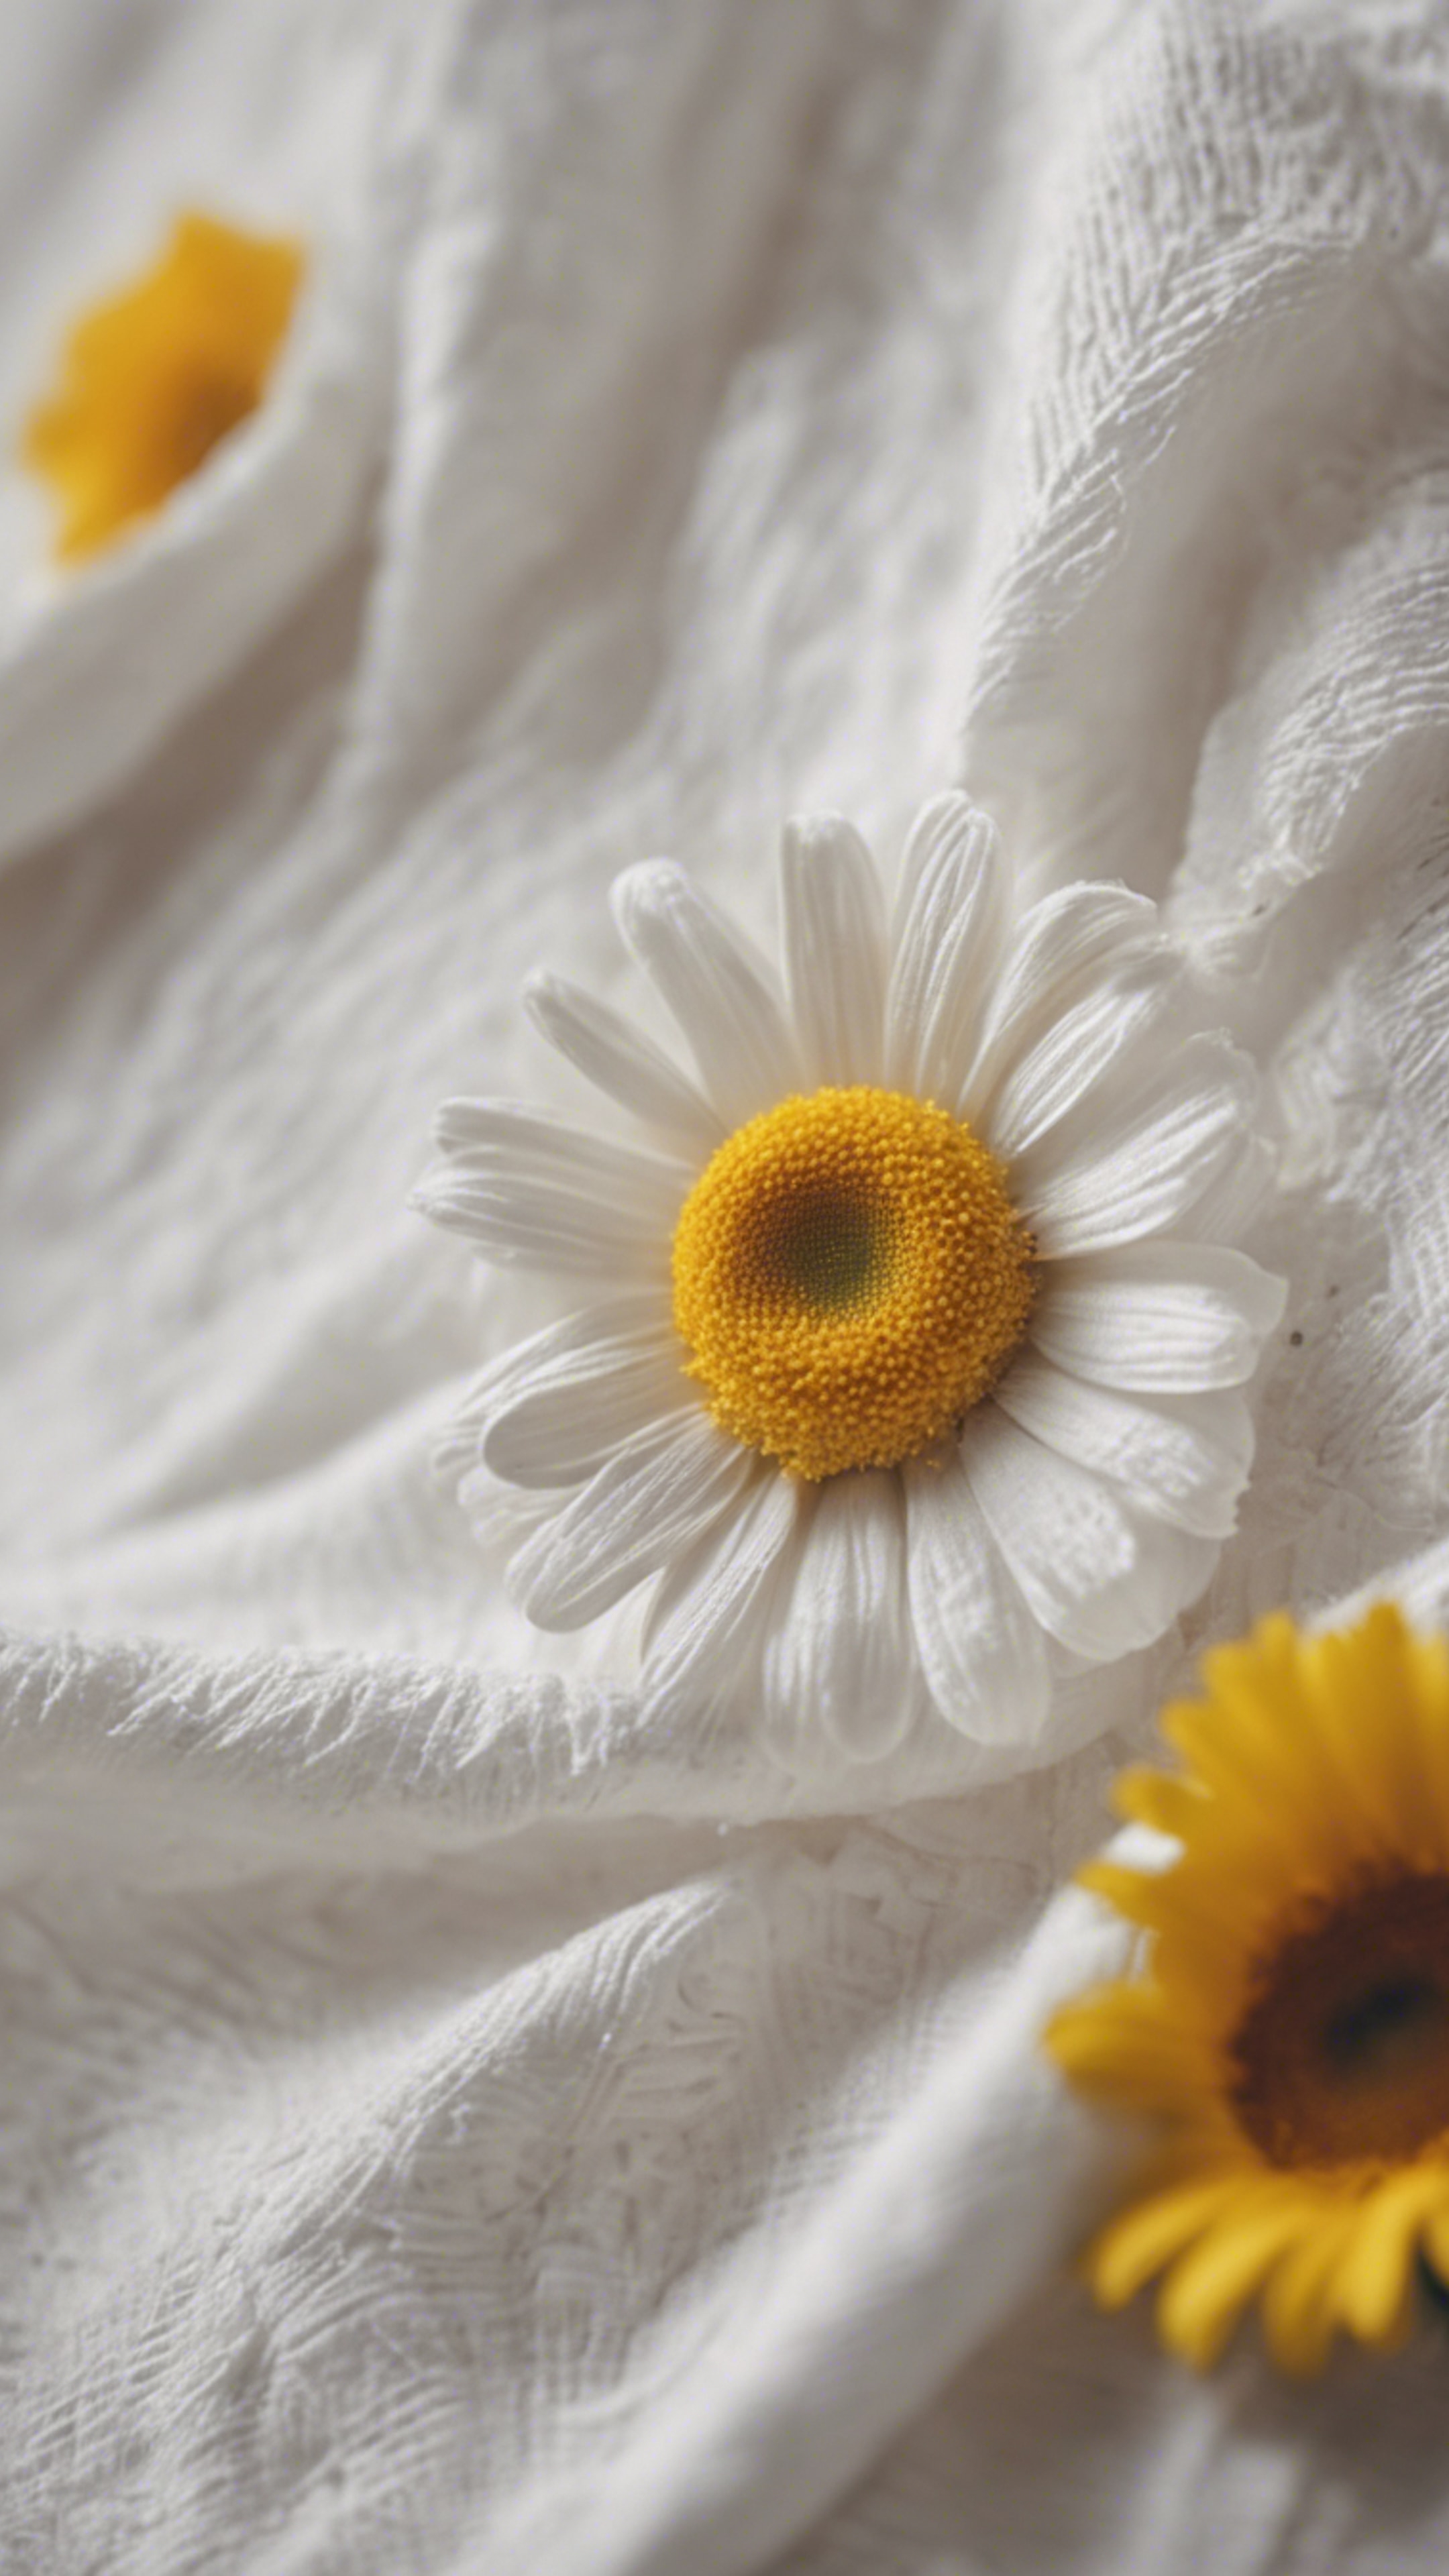 A white cotton dress with a daisy, featuring yellow petals and a white center. Papel de parede[81c17e18773146008e6c]